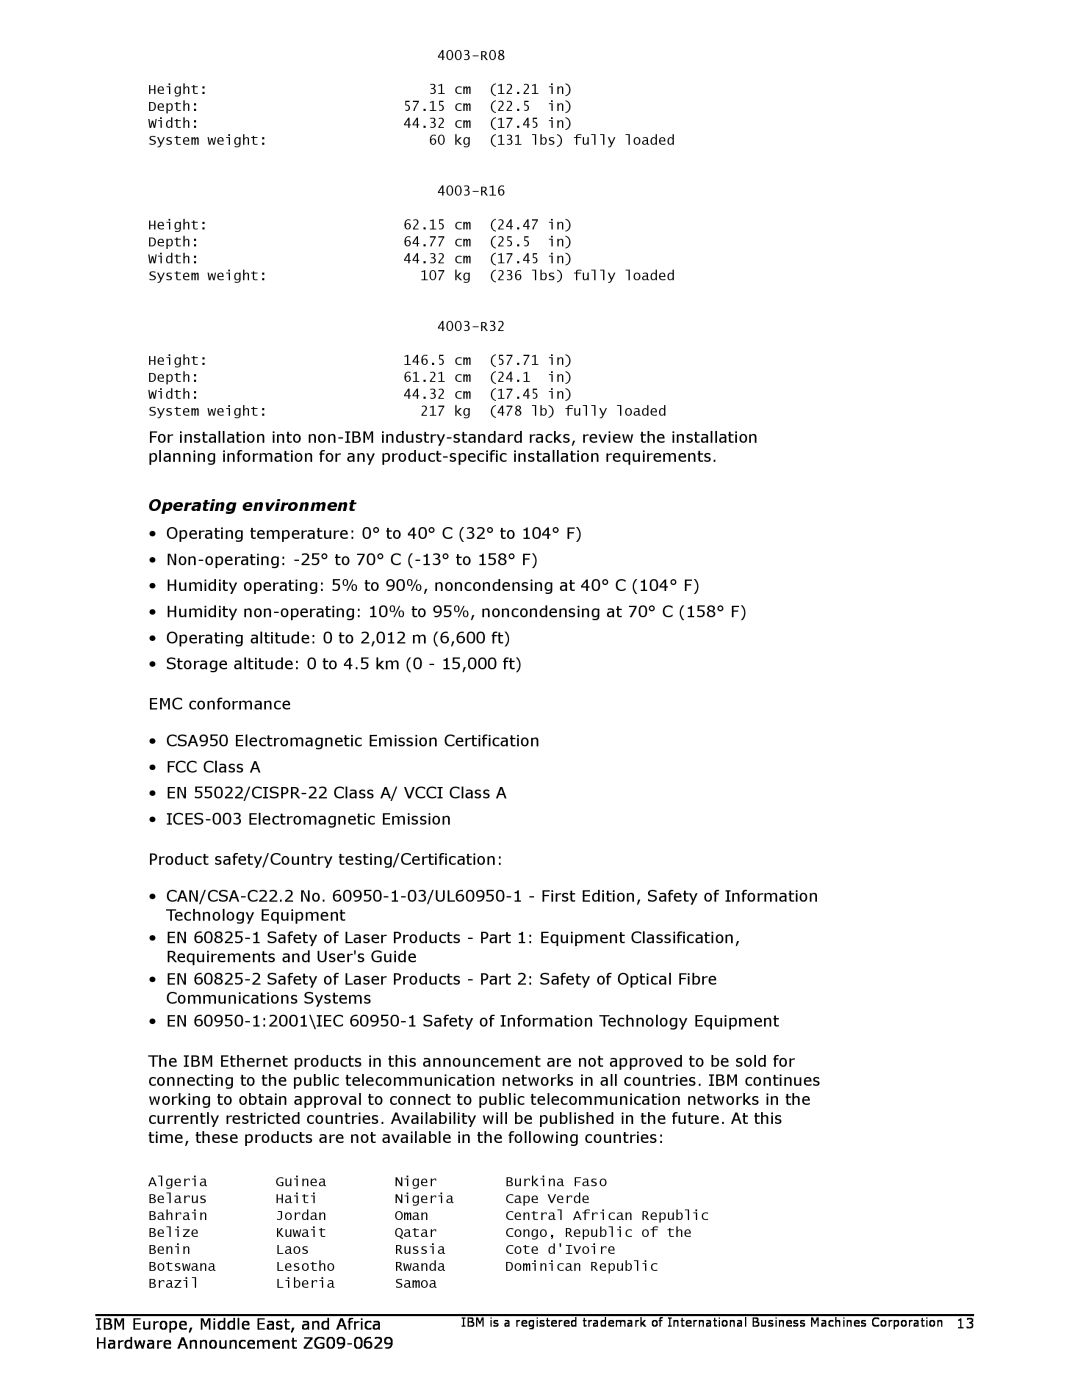 IBM ZG09-0629 manual Operating environment, •Operating temperature: 0 to 40 C 32 to 104 F 